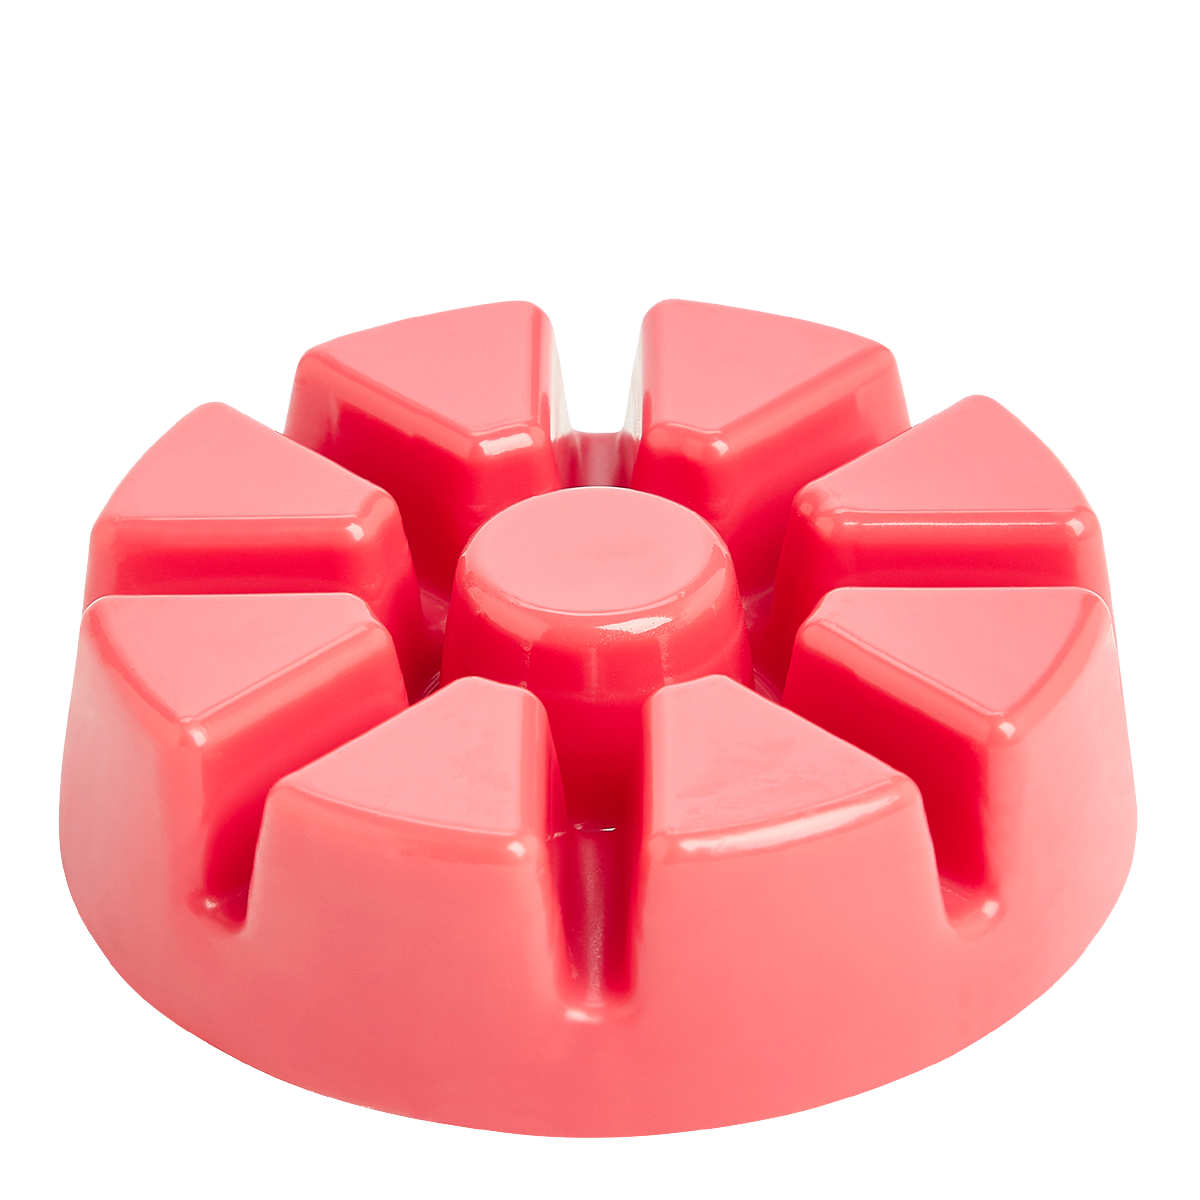 Juicy Red Apple Scent Plus® Wax Melts - PartyLite US